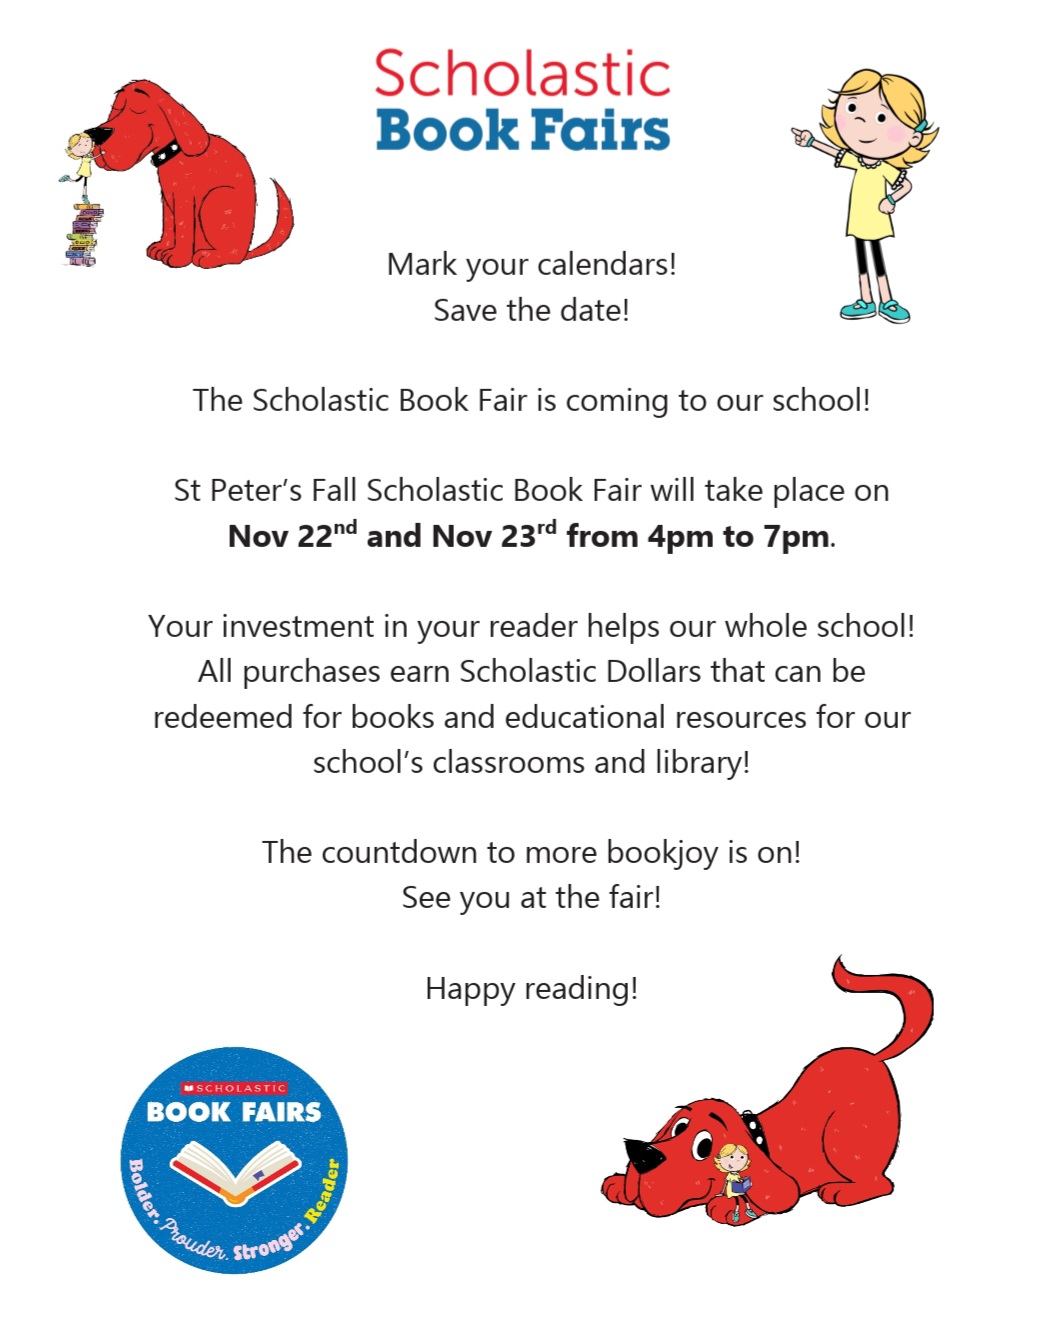 Scholastic Book Fair coming soon!!